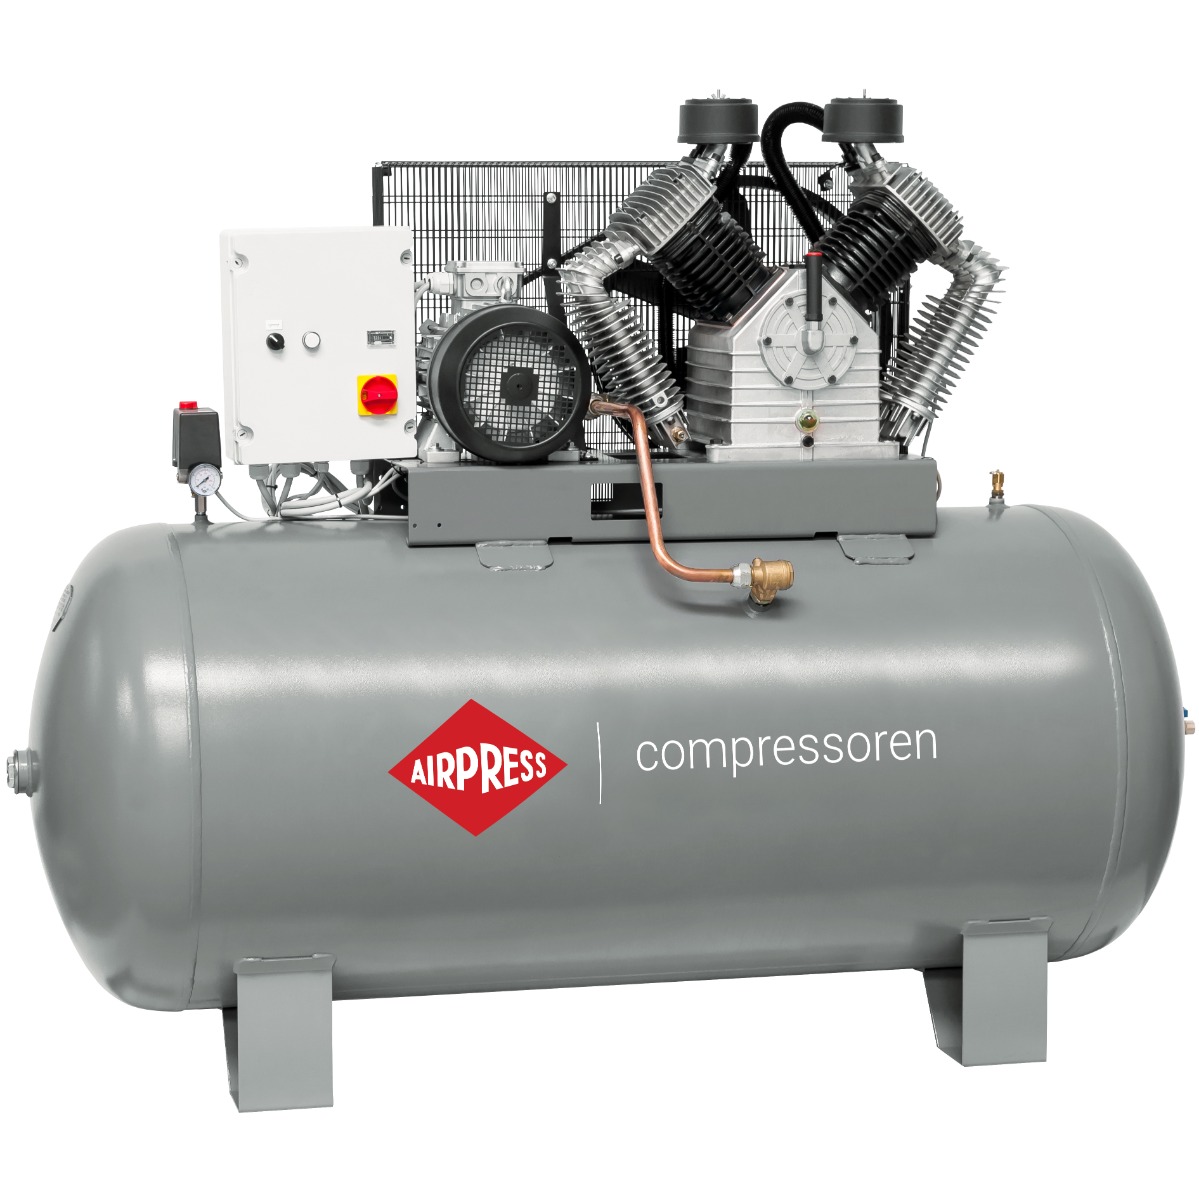 HK 2000-900 SD Pro compressor